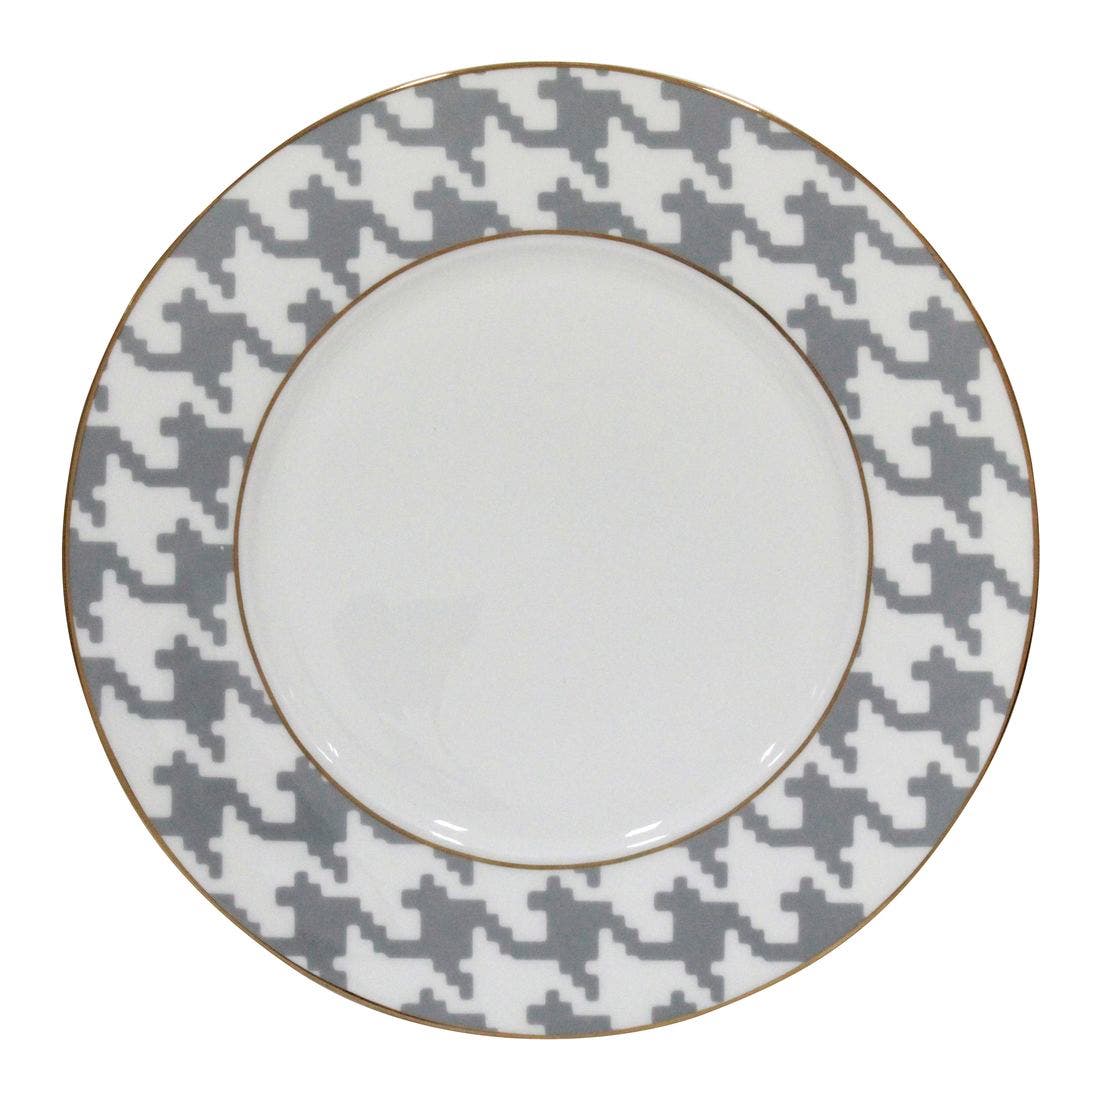 25029802-luxury-home-decor-tableware-kitchenware-plate-bowl-01